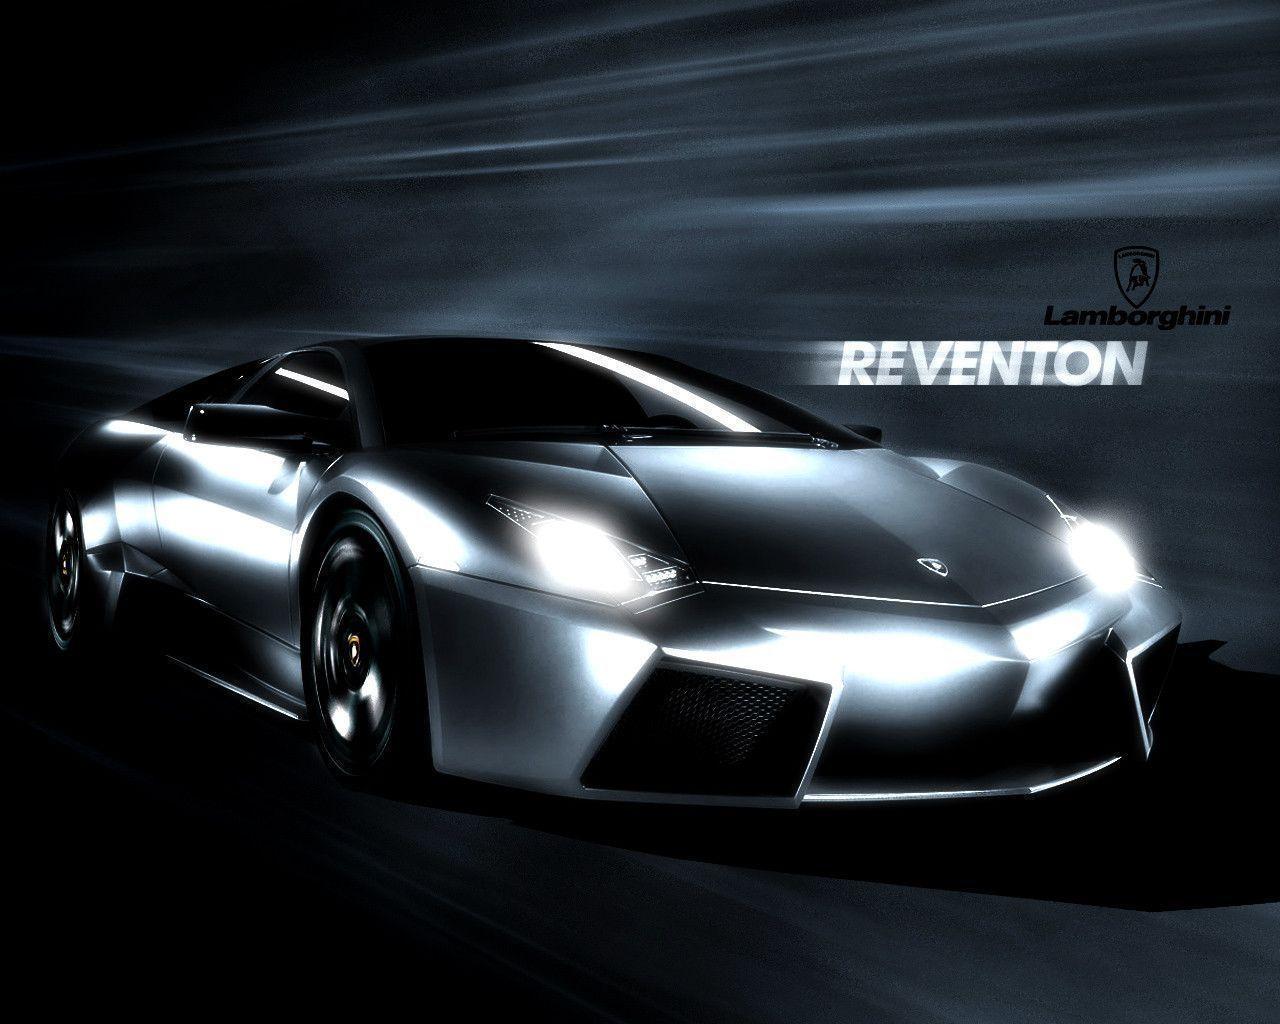 Lamborghini Reventon Wallpaper Image & Picture